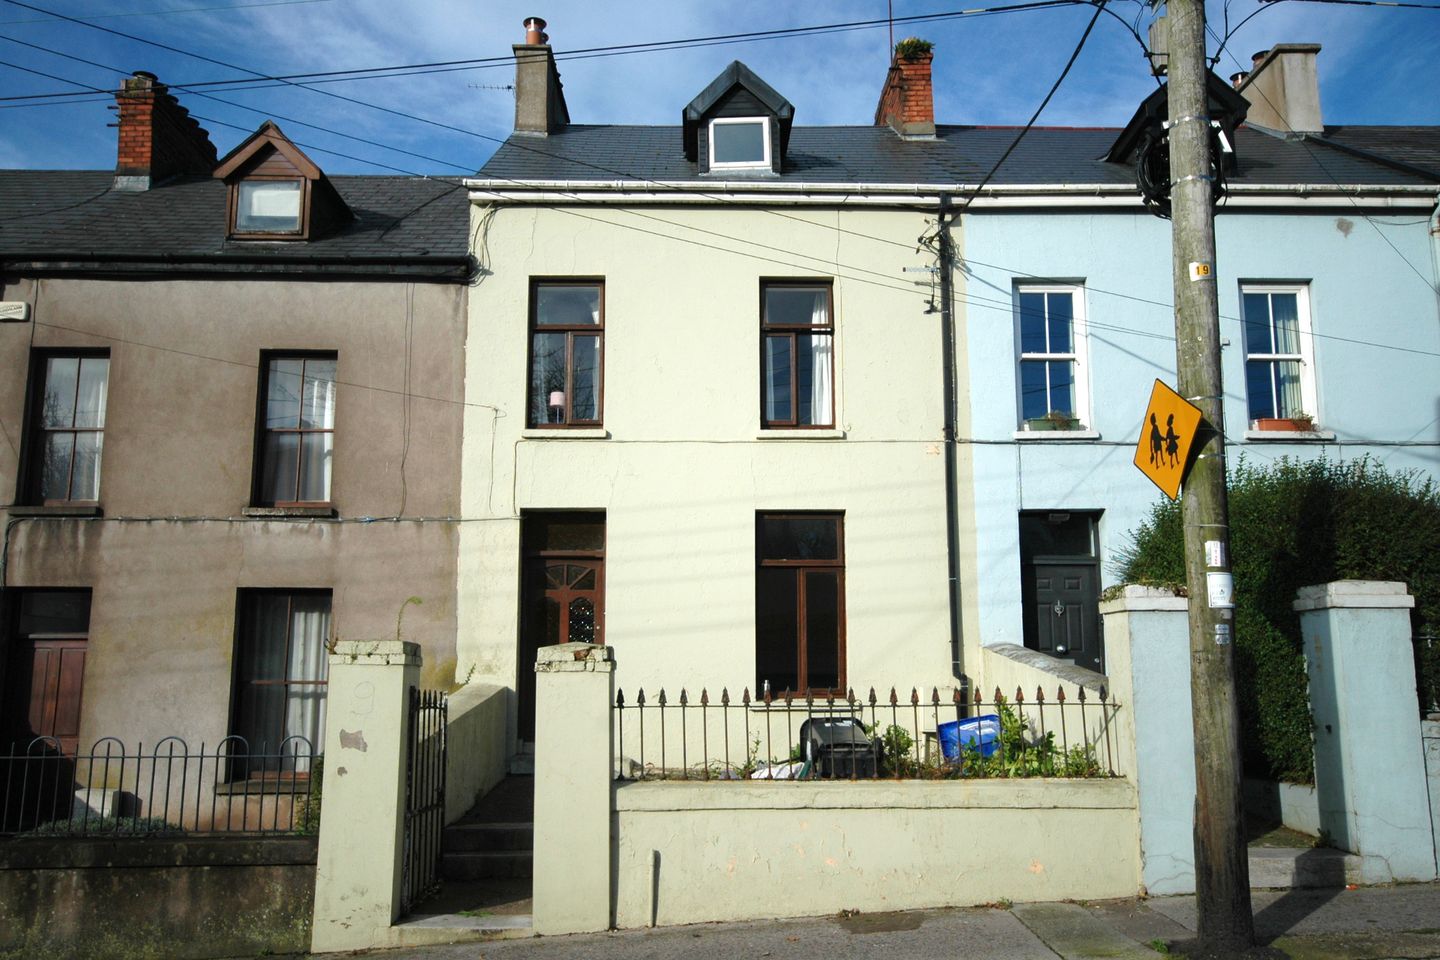 9 Mount View Terrace, Ballyhooly Road, St. Lukes, Co. Cork